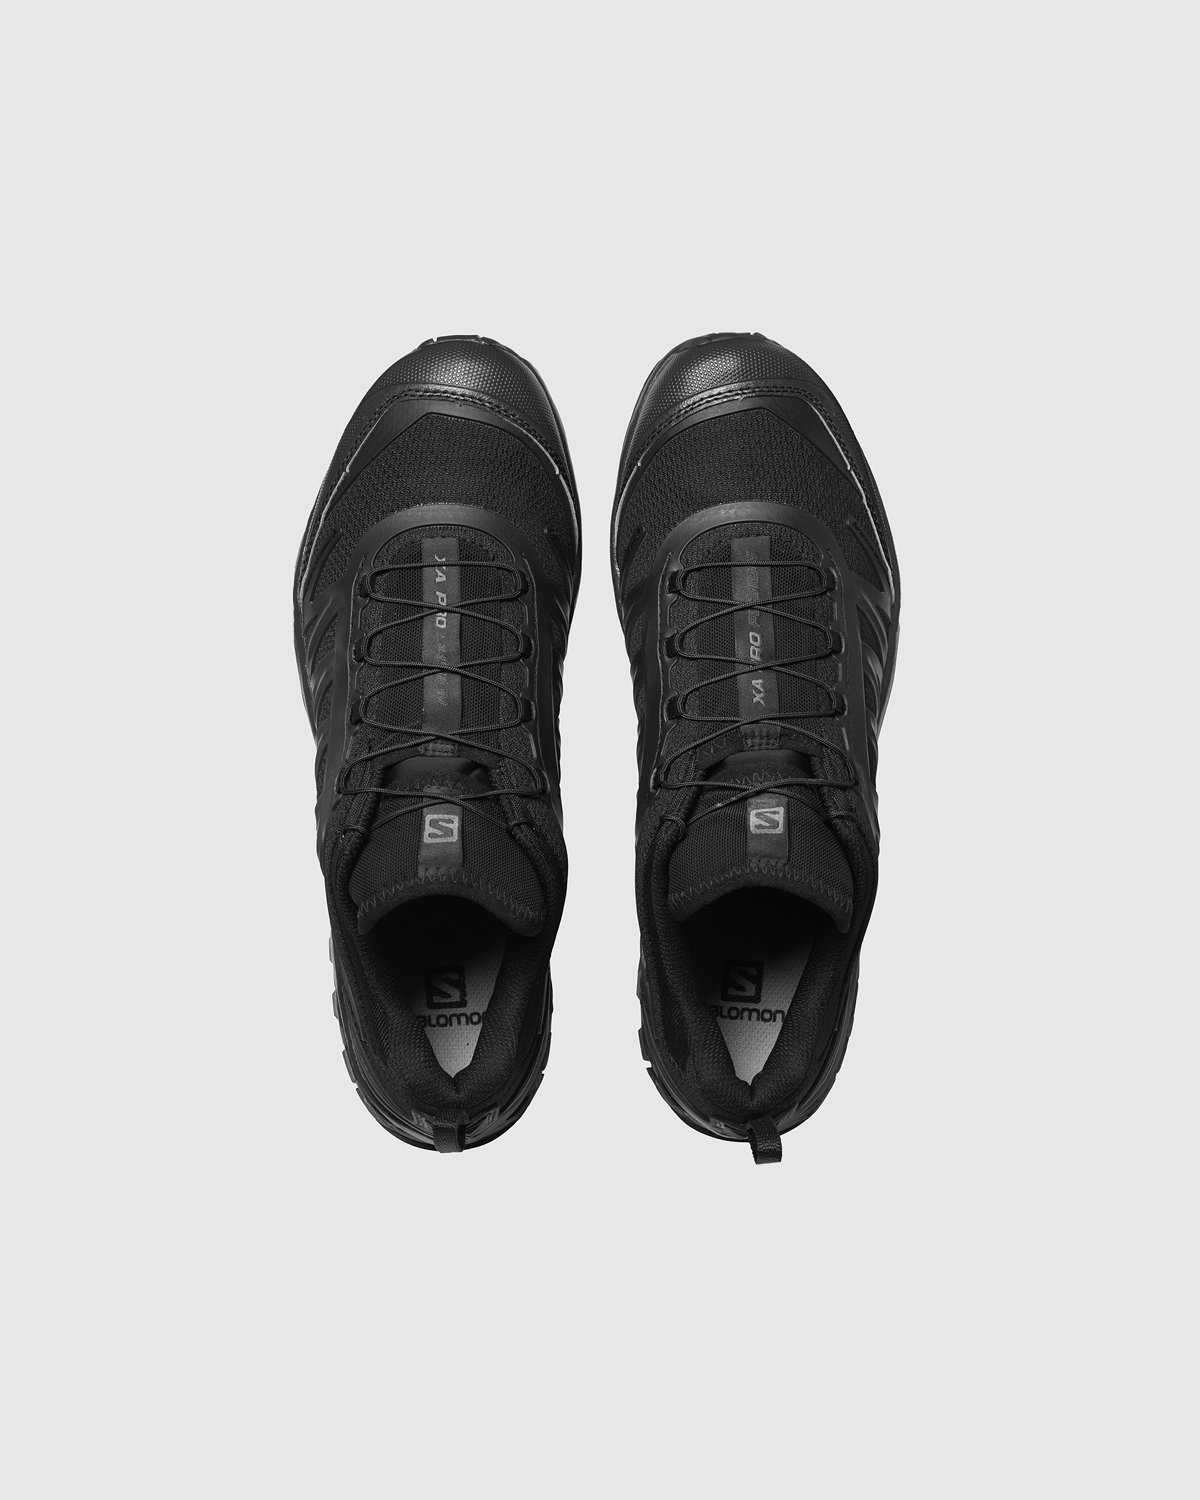 Salomon - XA-PRO FUSION ADVANCED Black/Black/Magnet - Footwear - Black - Image 3